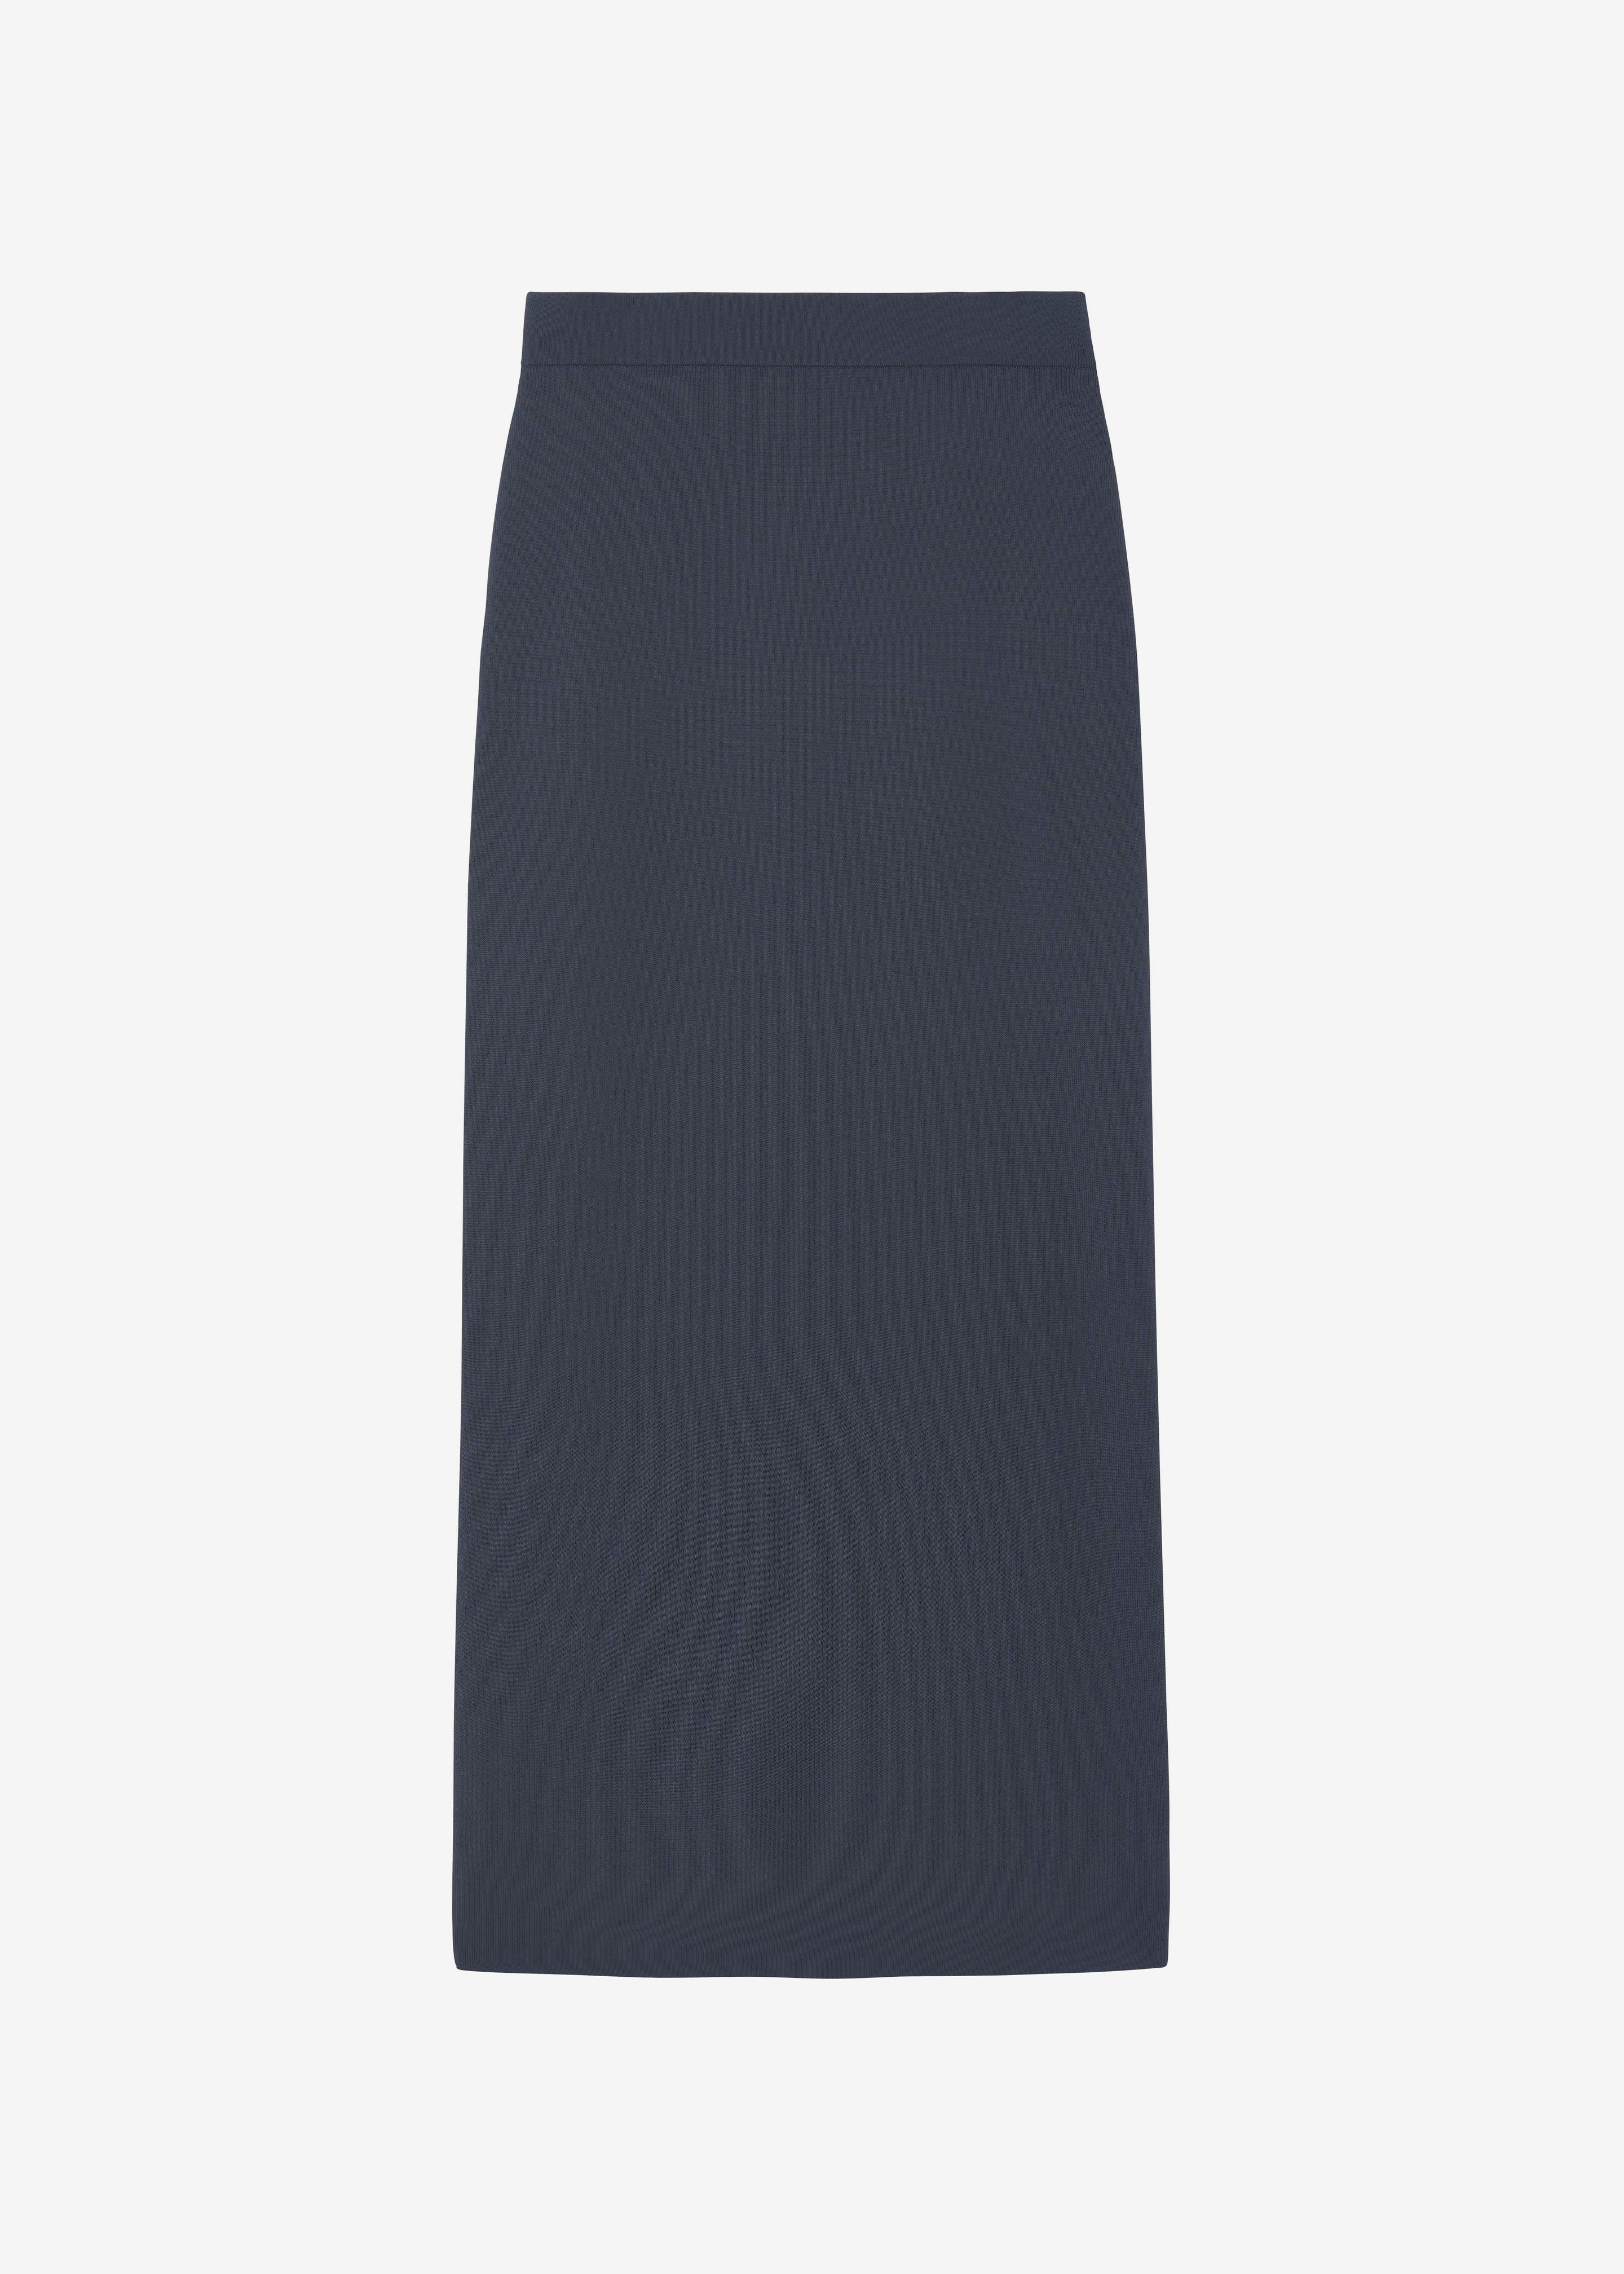 Solange Knit Pencil Skirt - Grey - 12